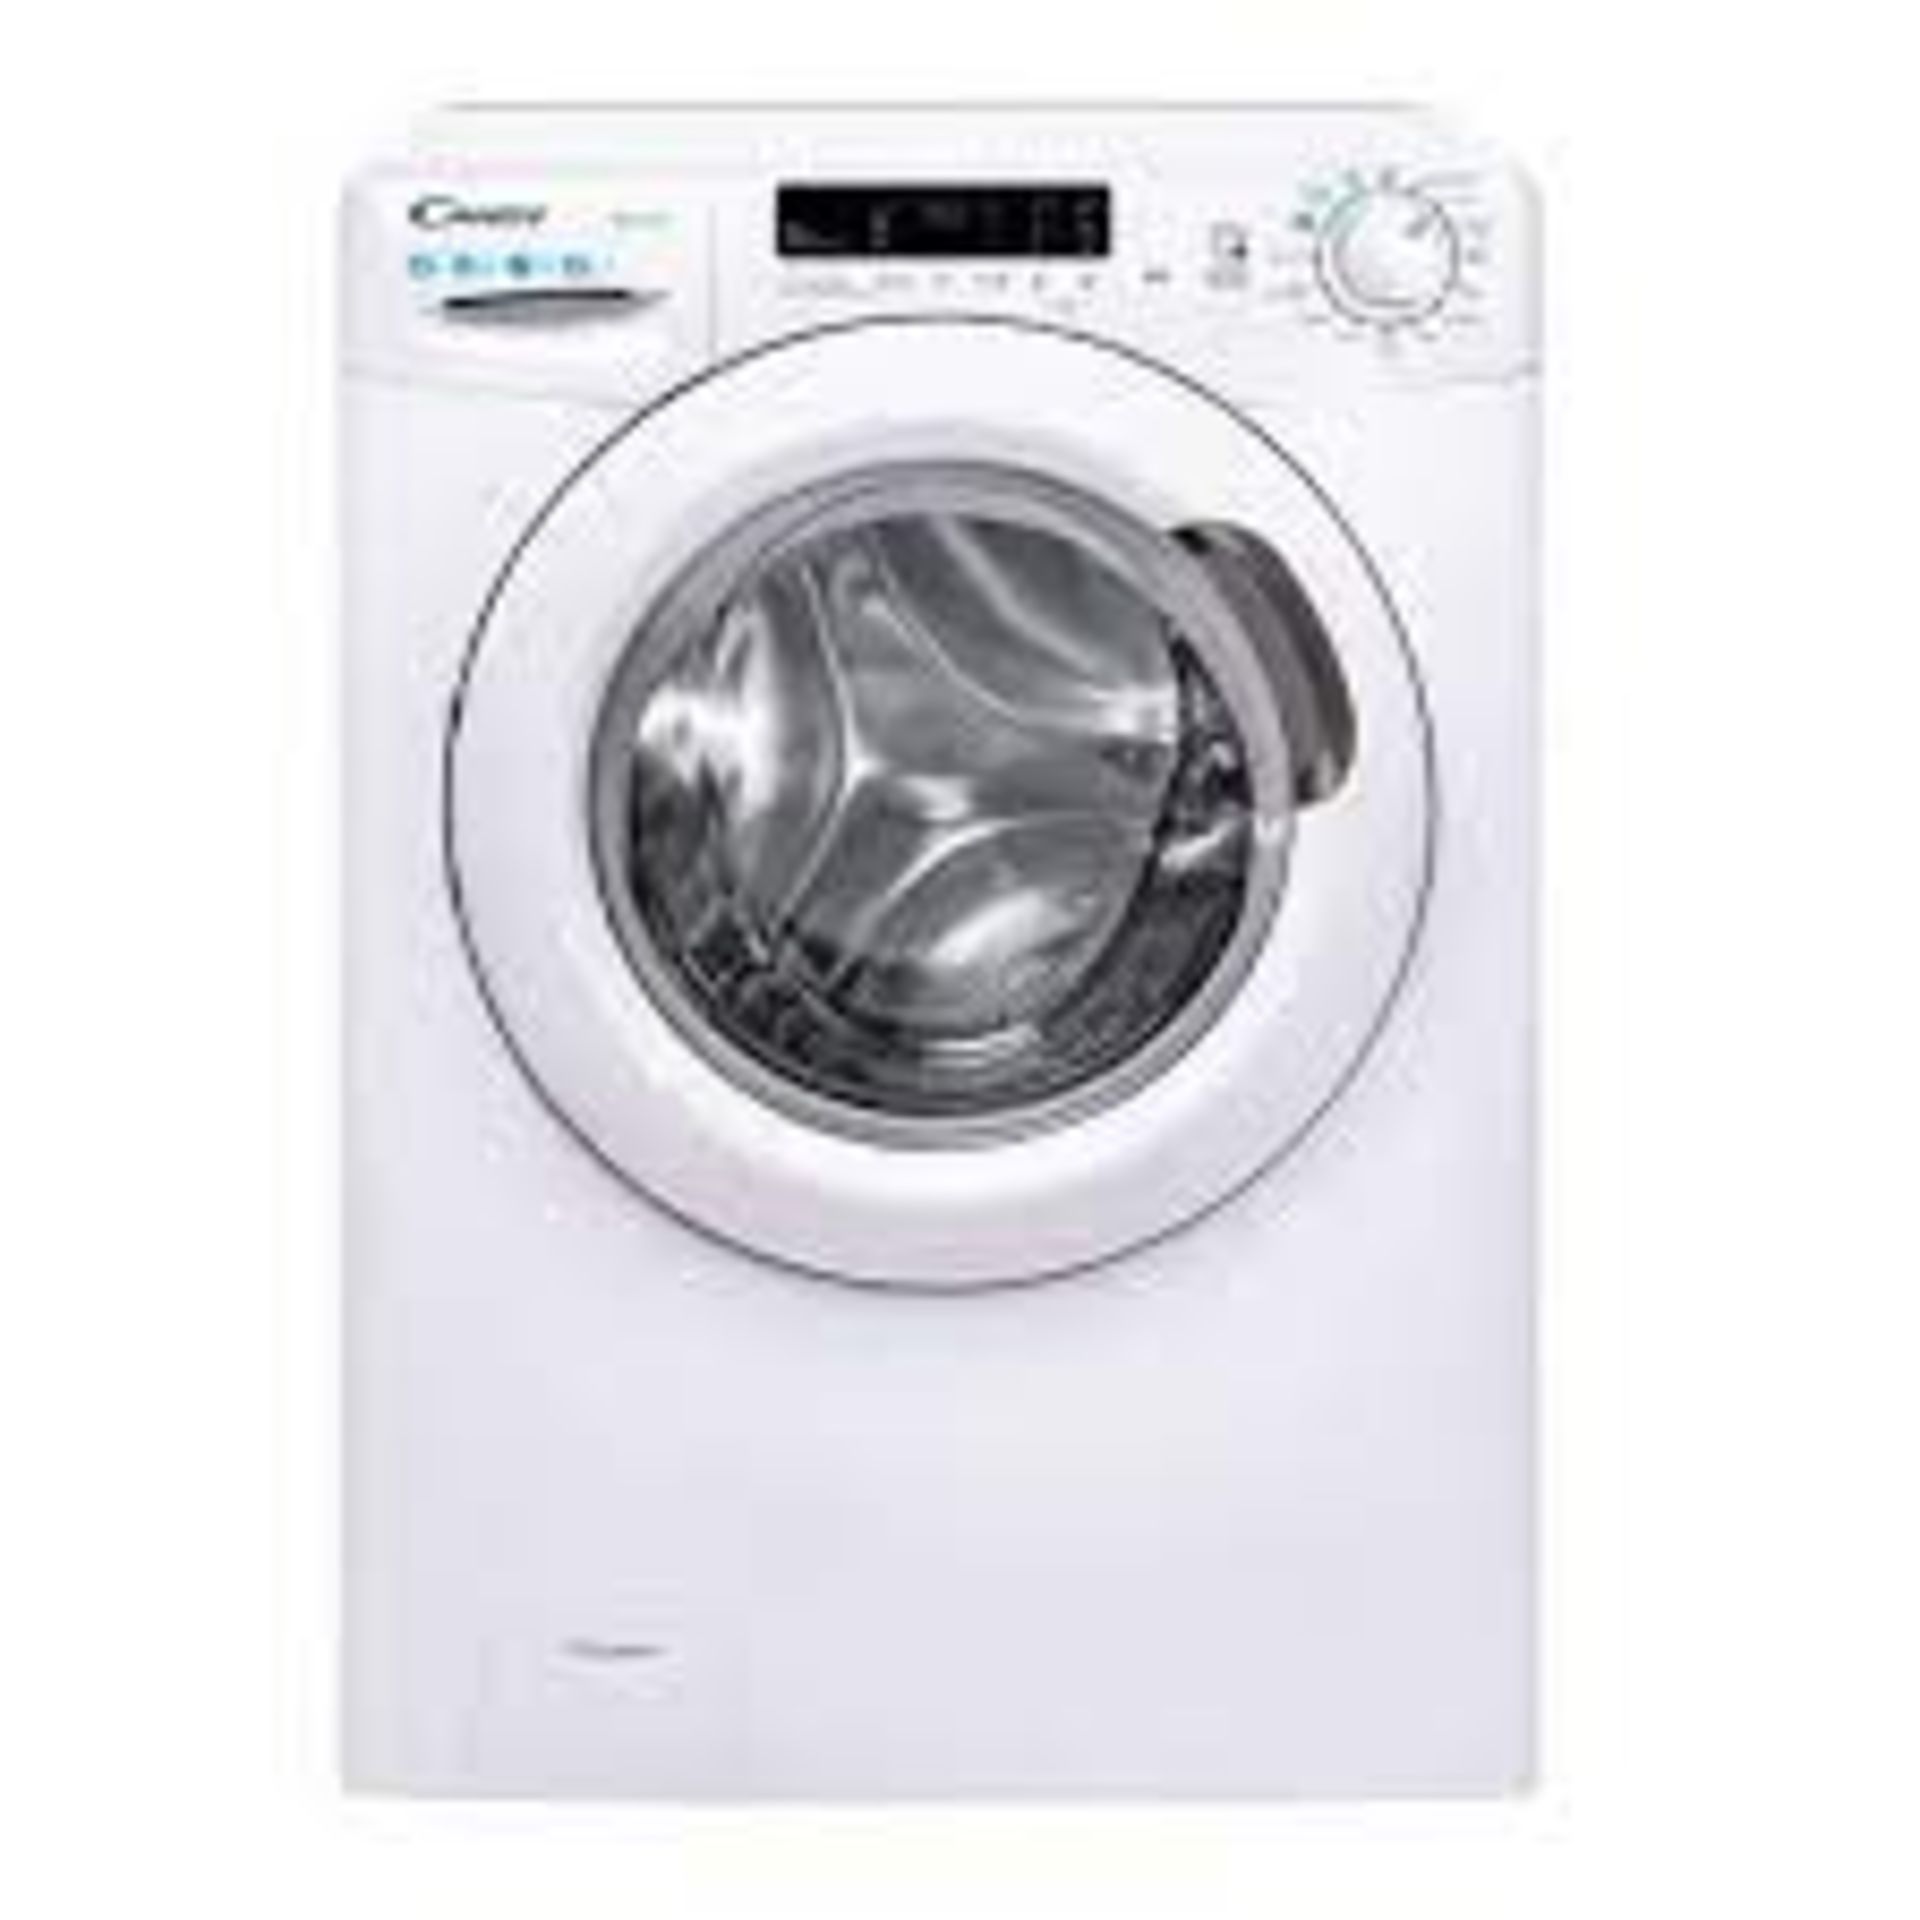 Candy CS 1482DE/1-80 8kg Freestanding 1400rpm Washing machine - White. - PCK. RRP £359.00. This